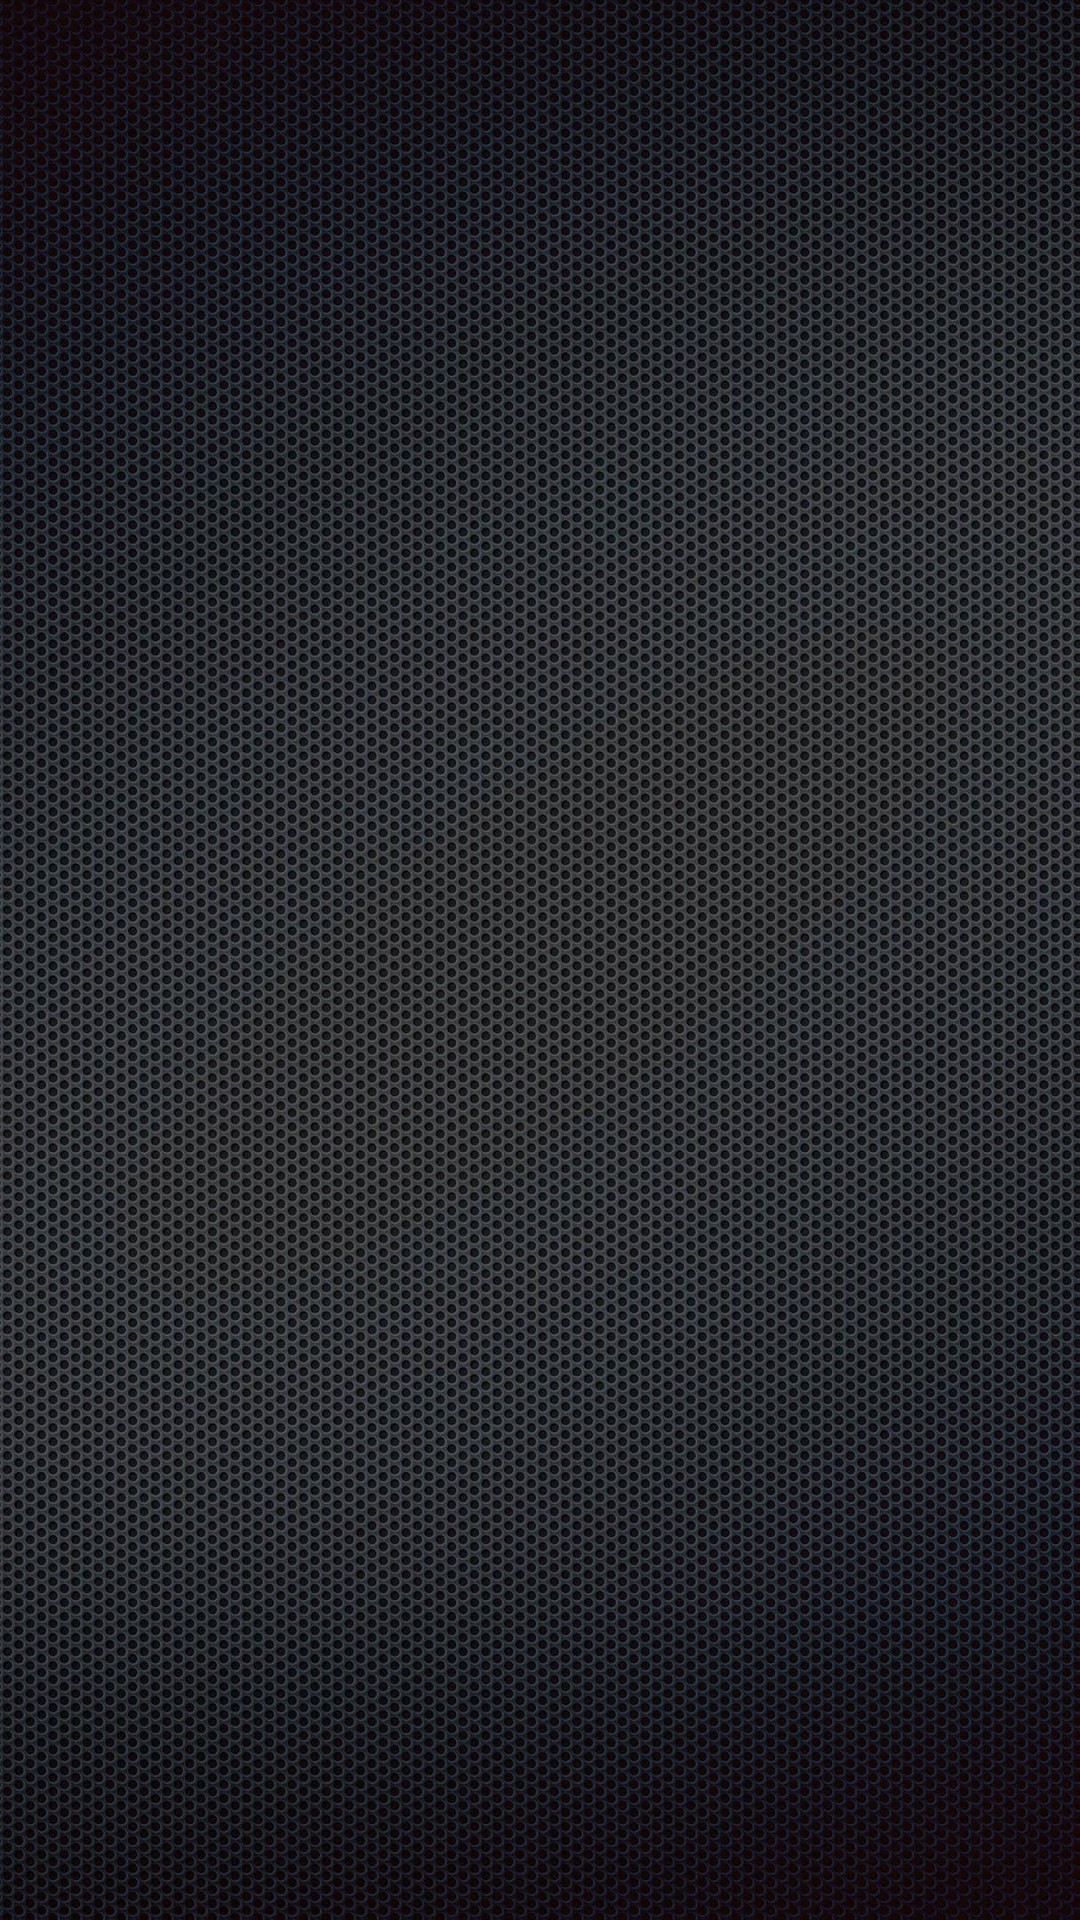 Black Grill Texture Wallpaper for Google Nexus 5